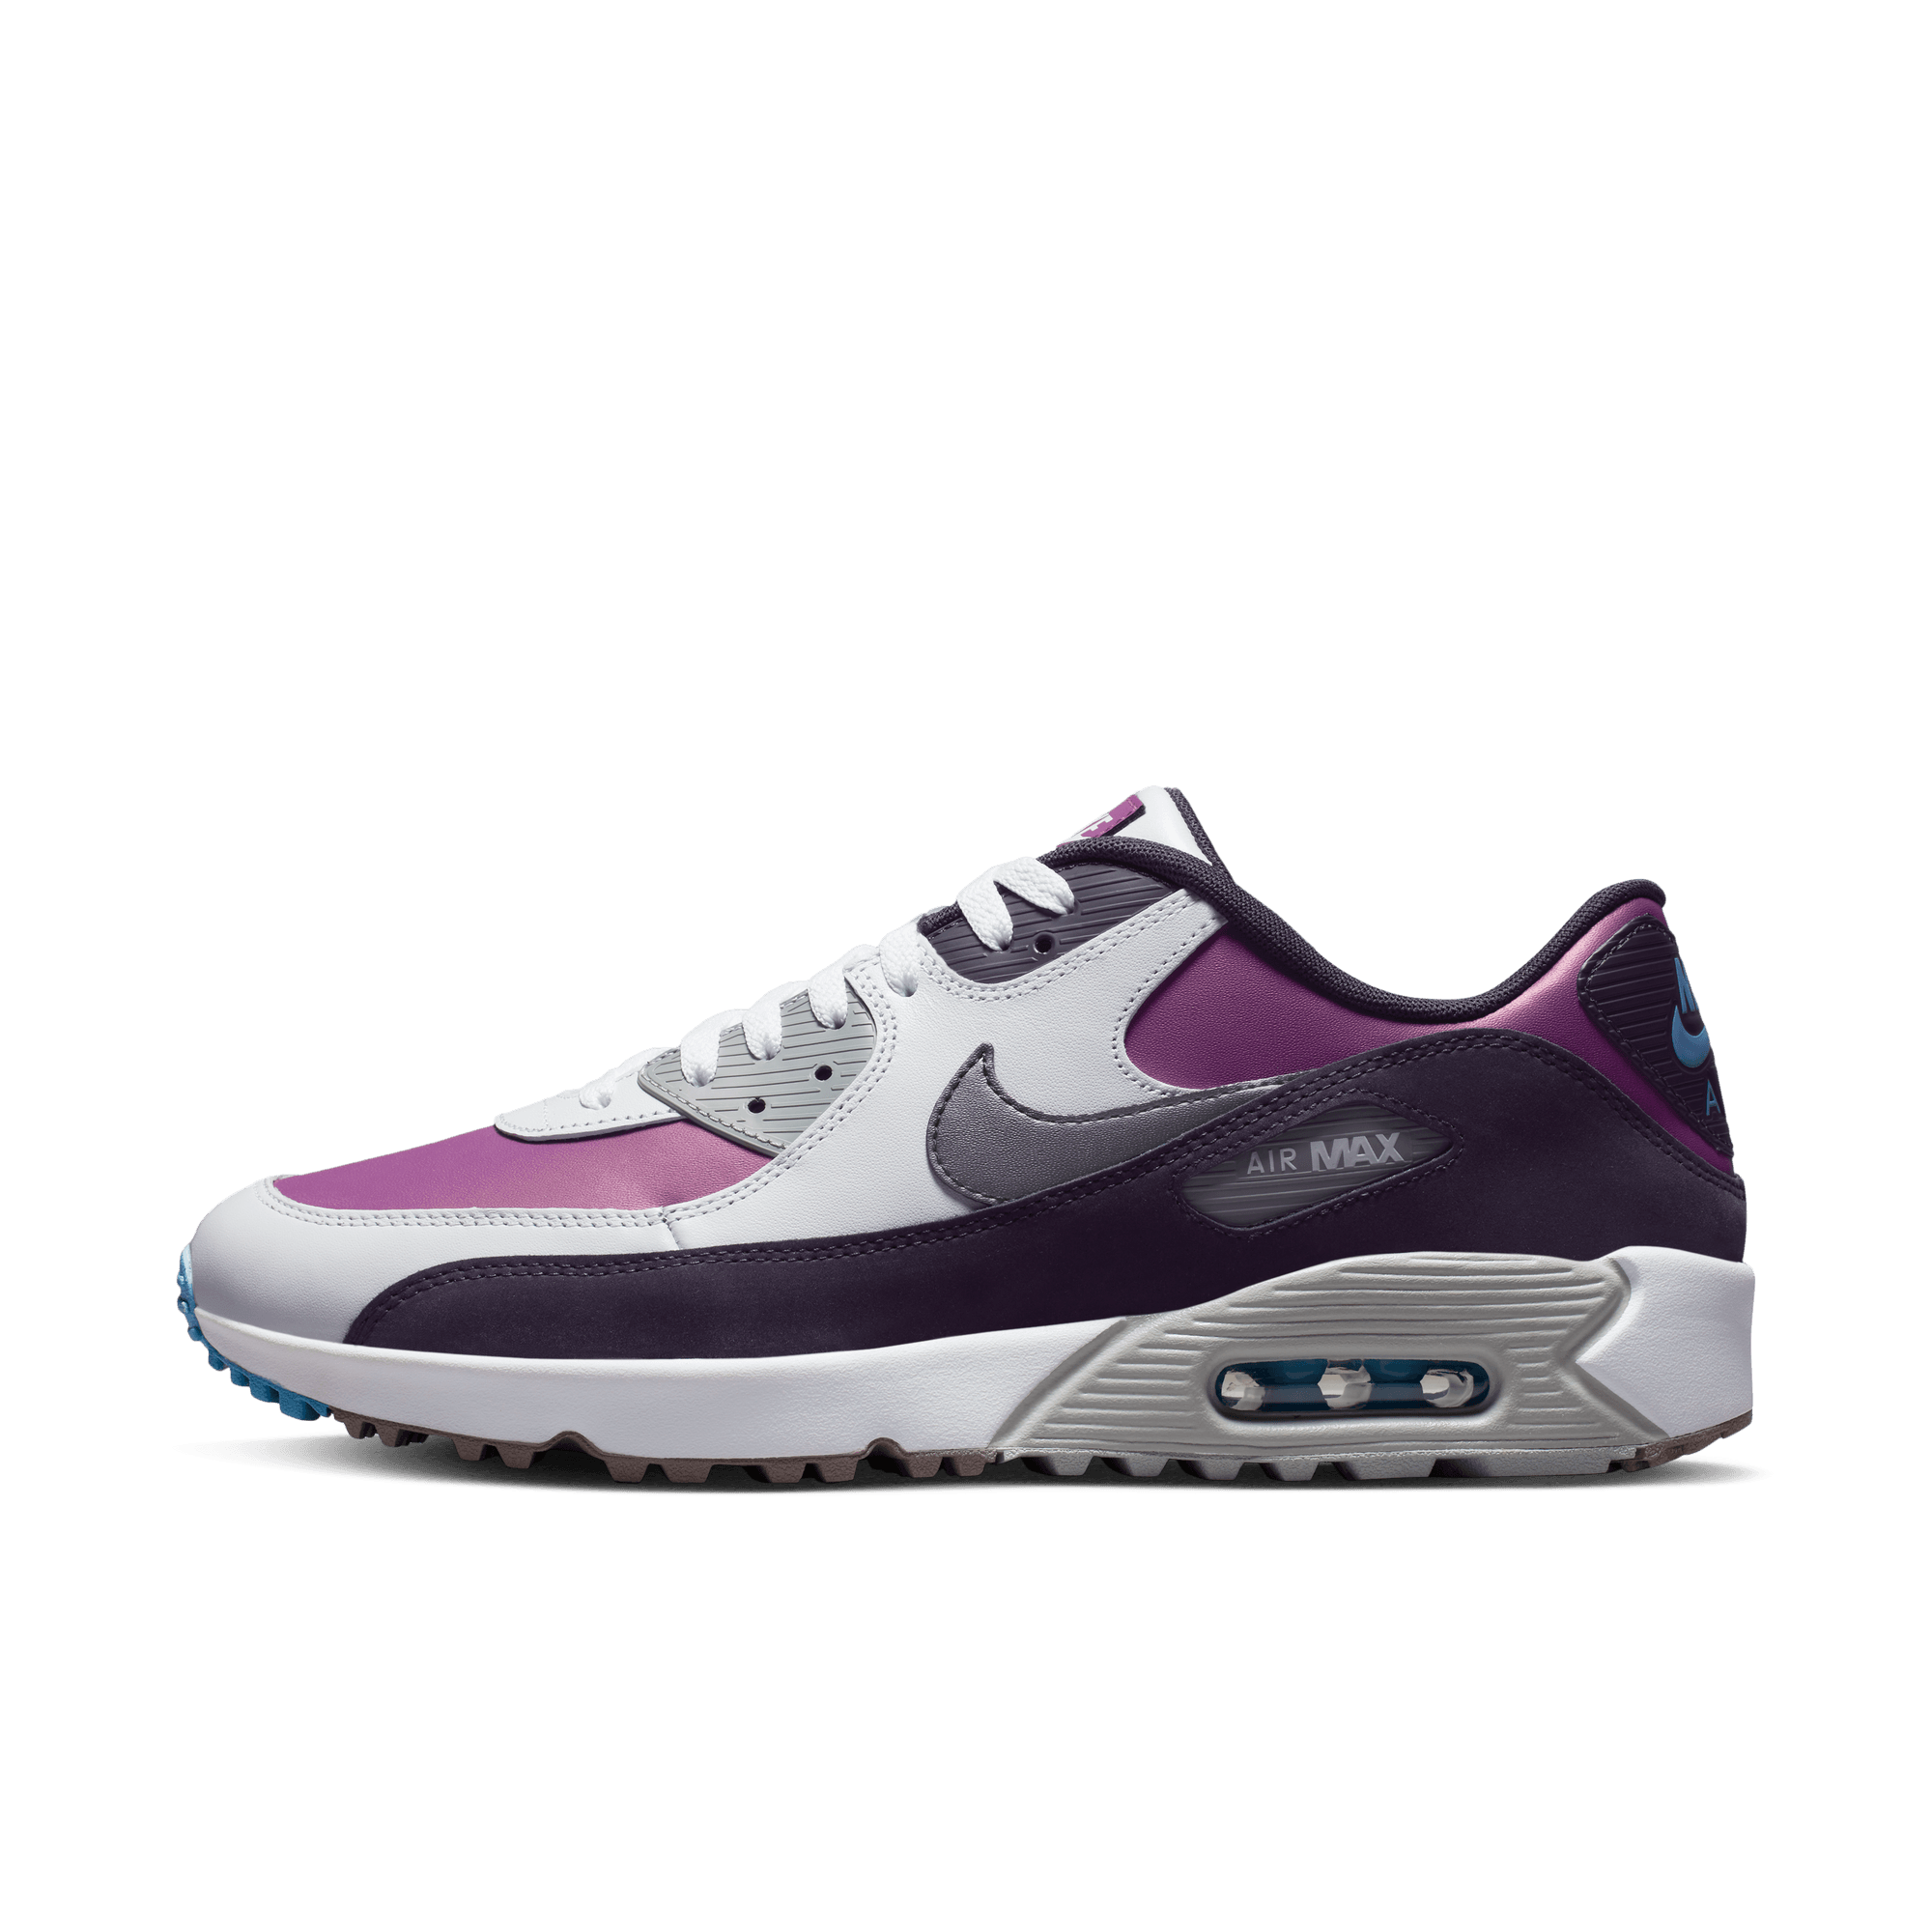 Air Max 90 G NRG Spikeless Golf Shoe - Purple/White | NIKE | Golf 